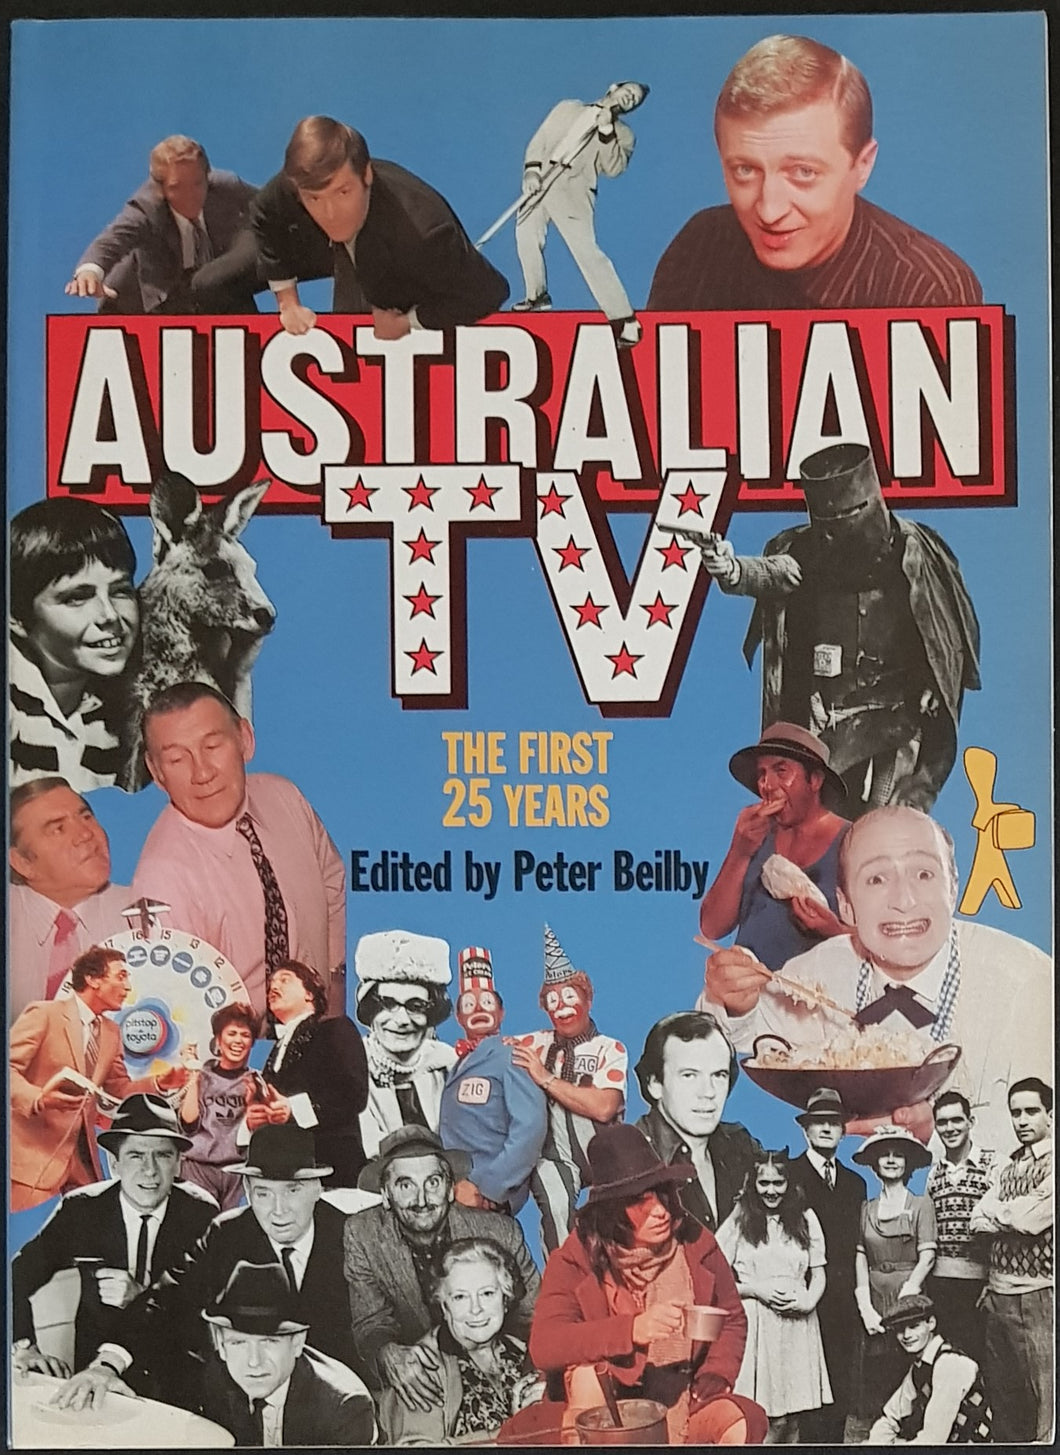 Film & Stage Memorabilia - Australian TV The First 25 Years